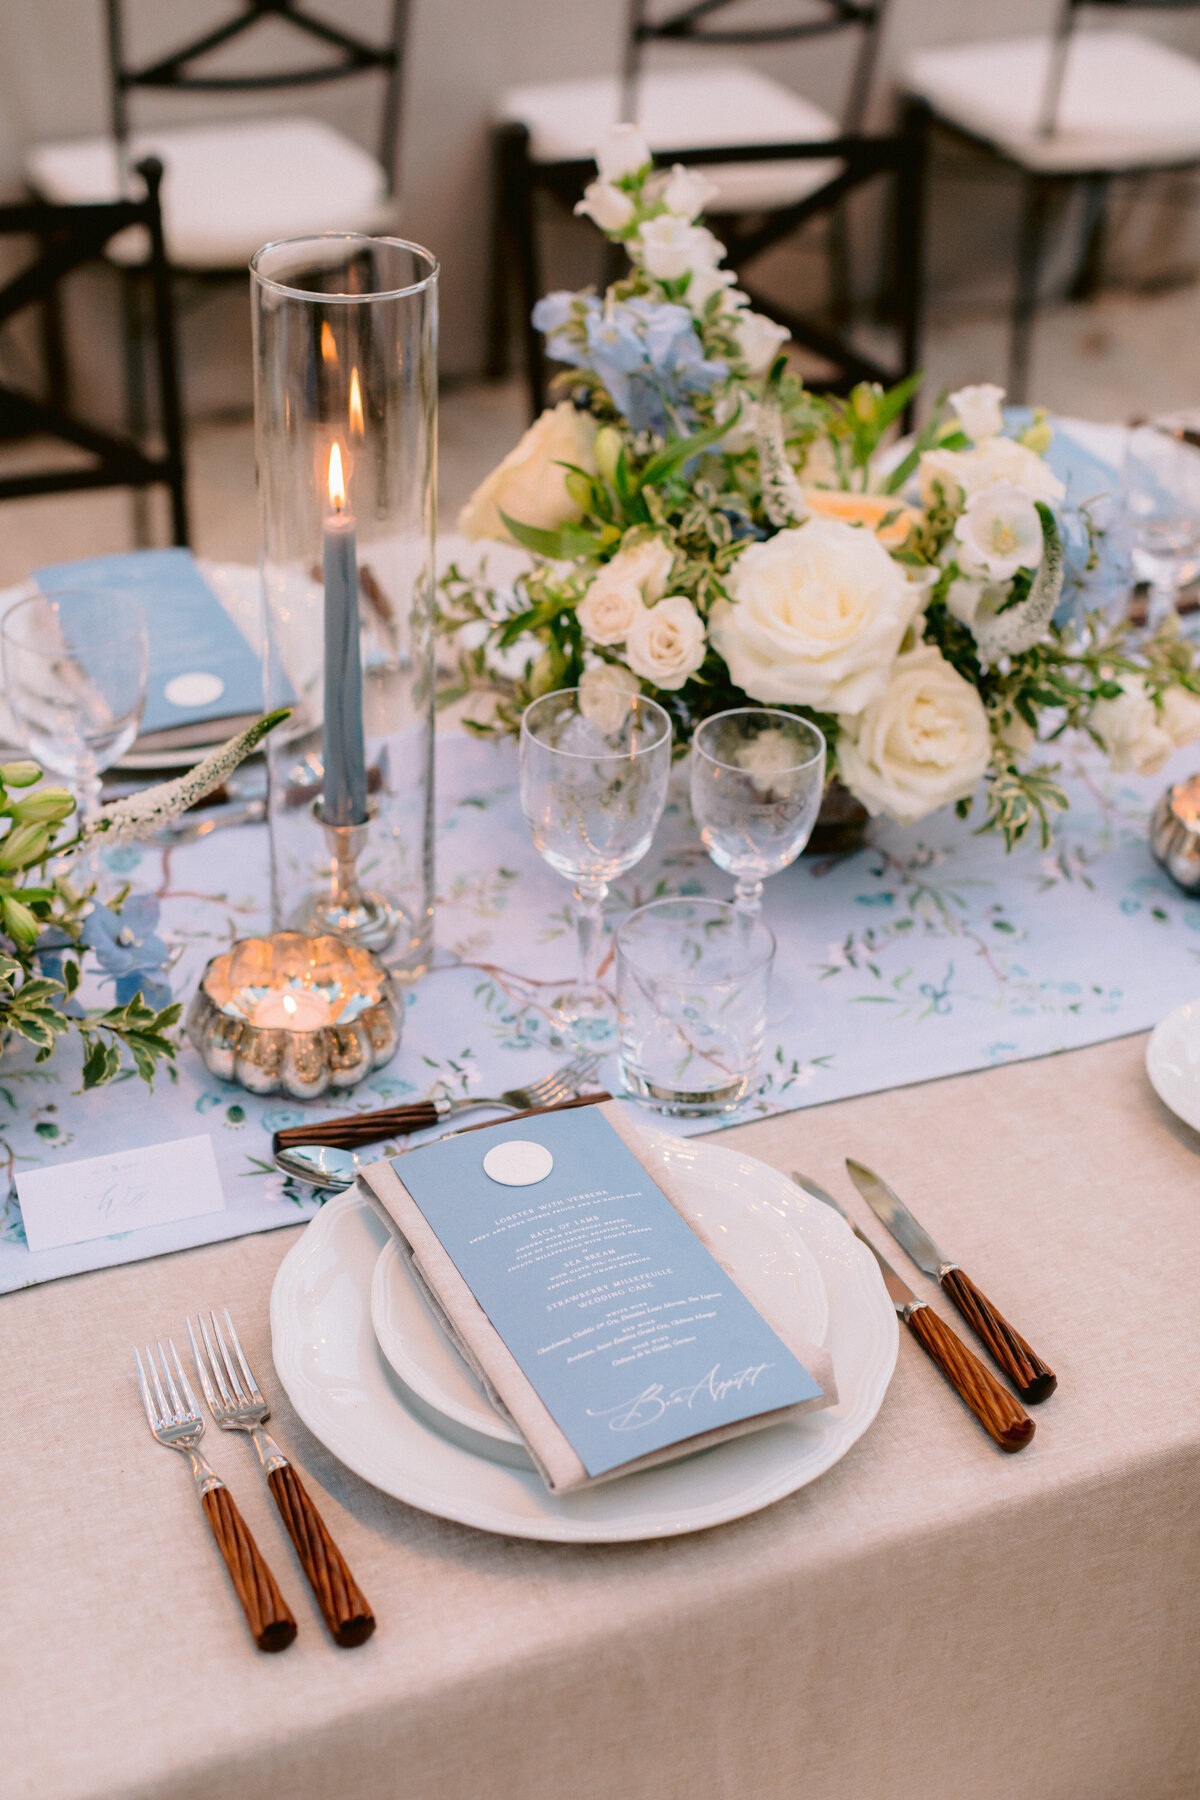 Elegant tablescape for outdoor wedding dinner